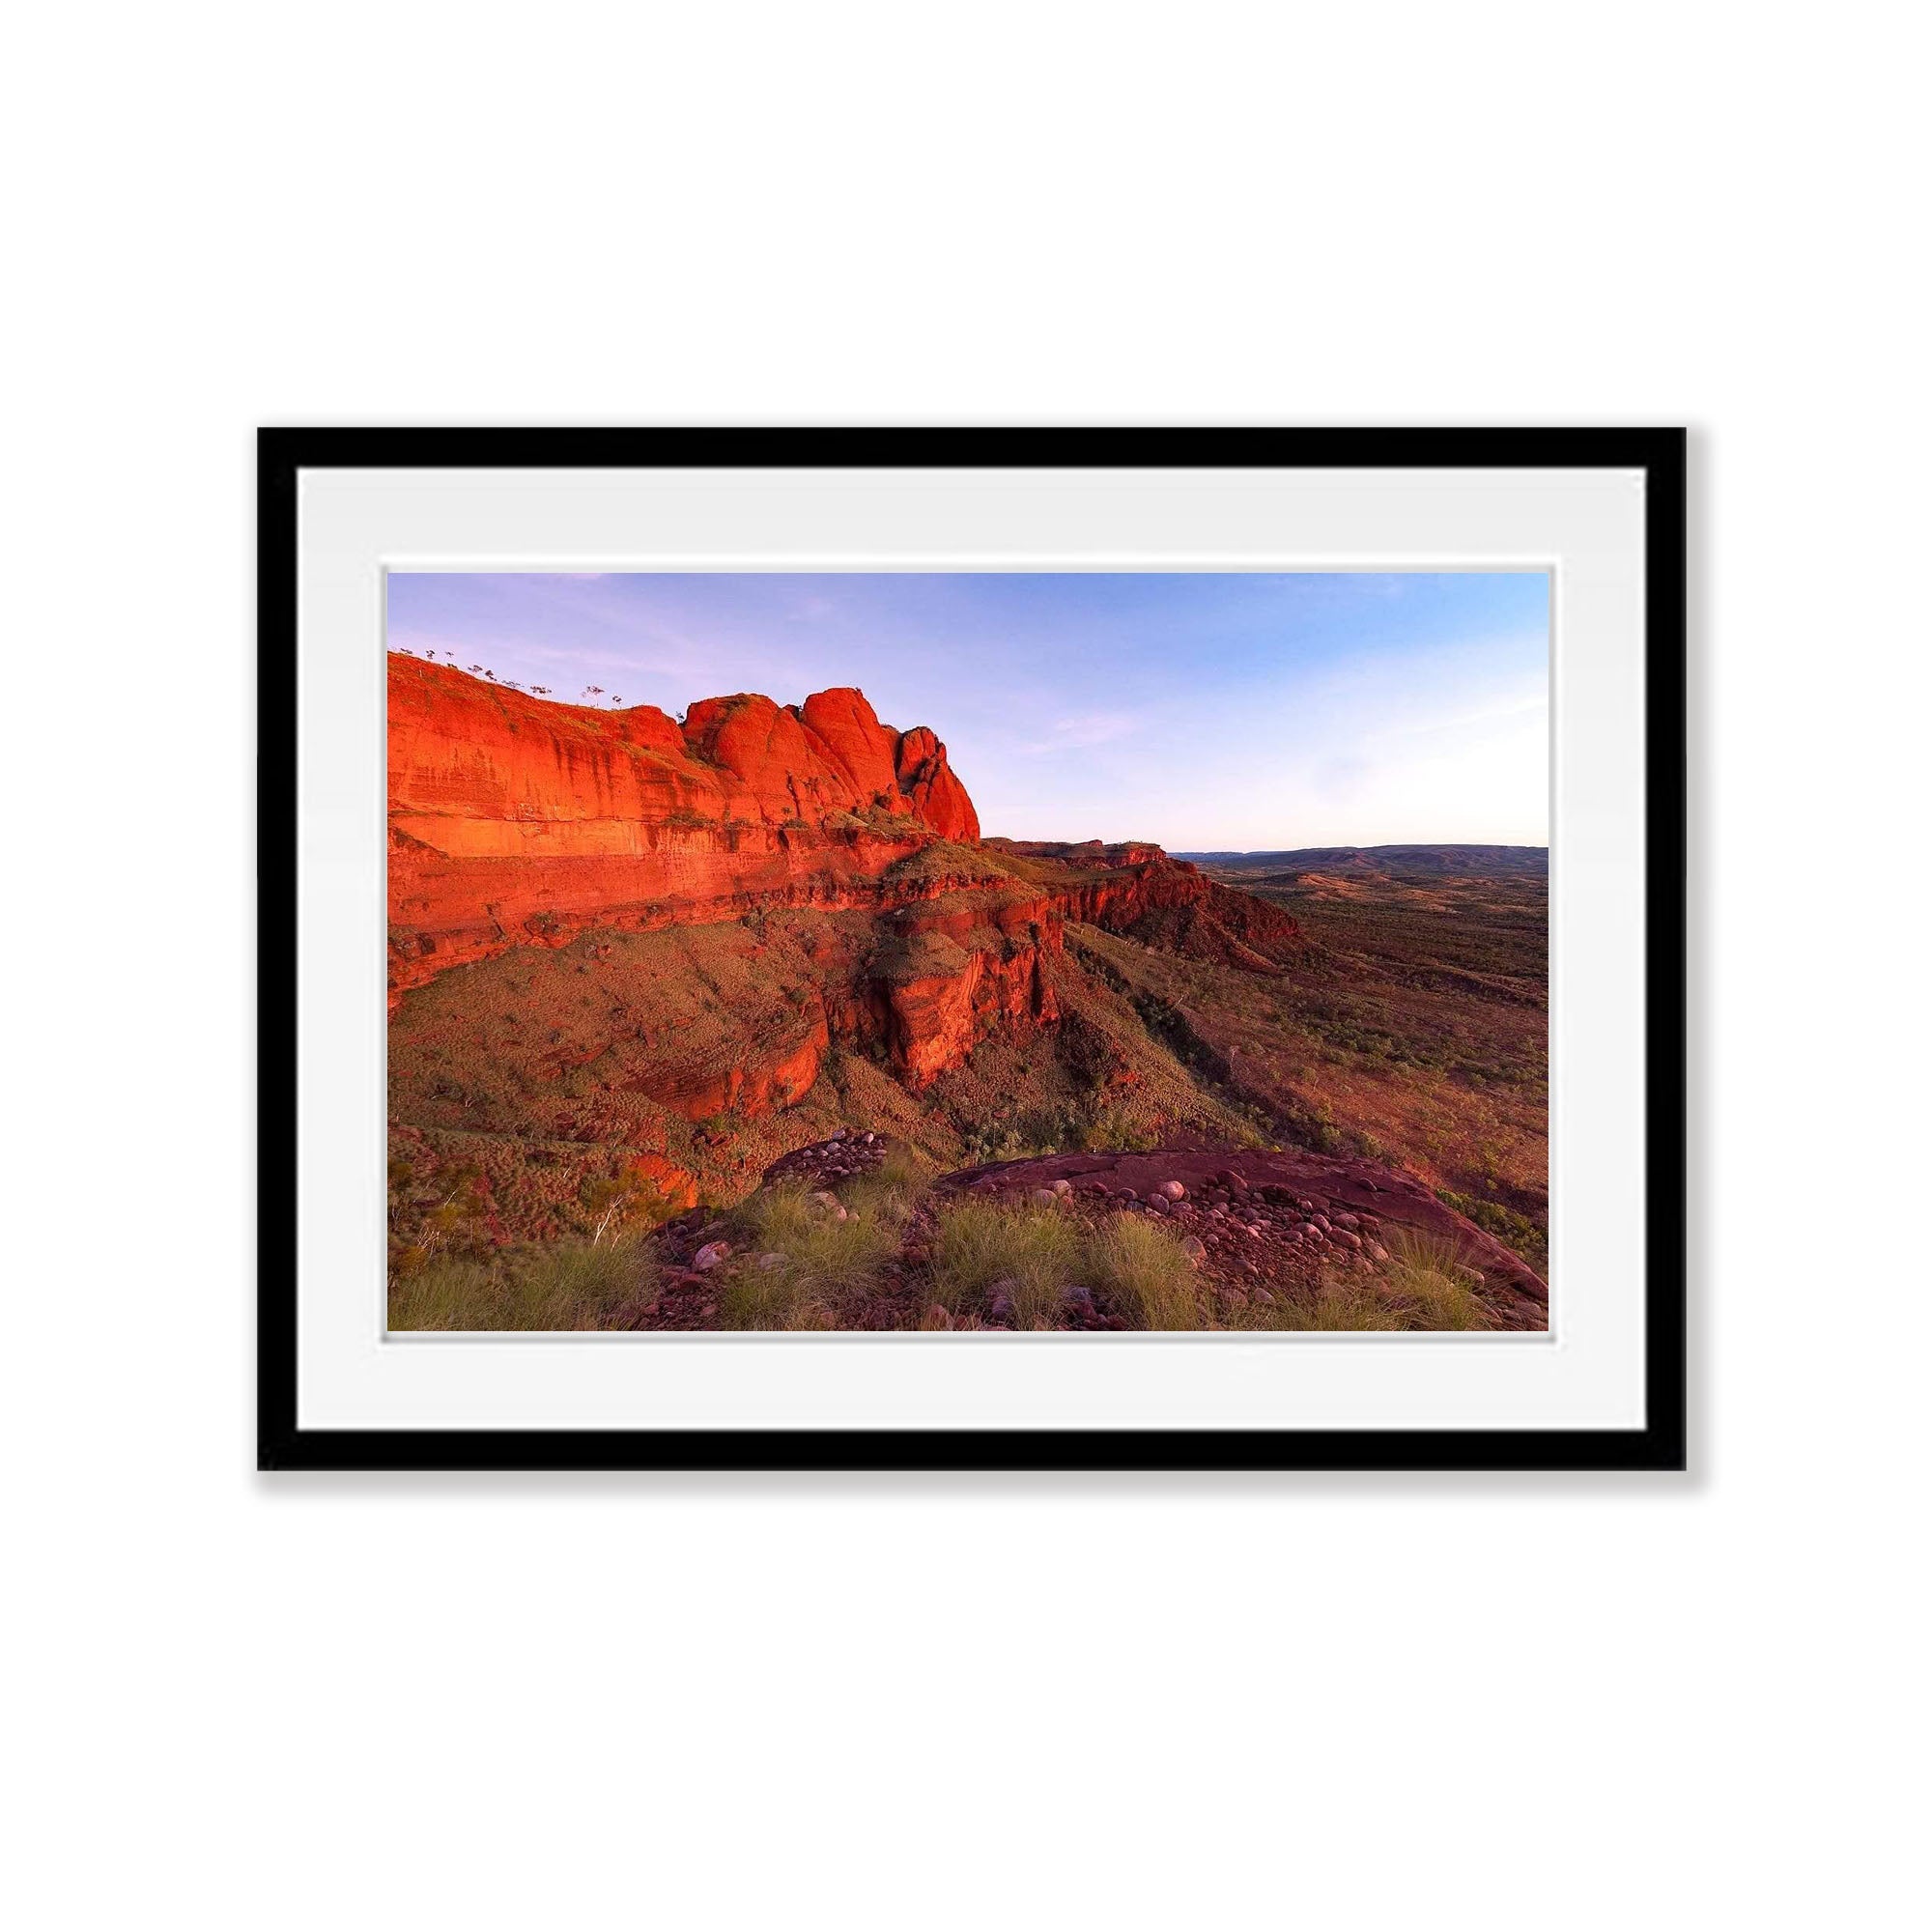 Ragged Range, The Kimberley, Western Australia